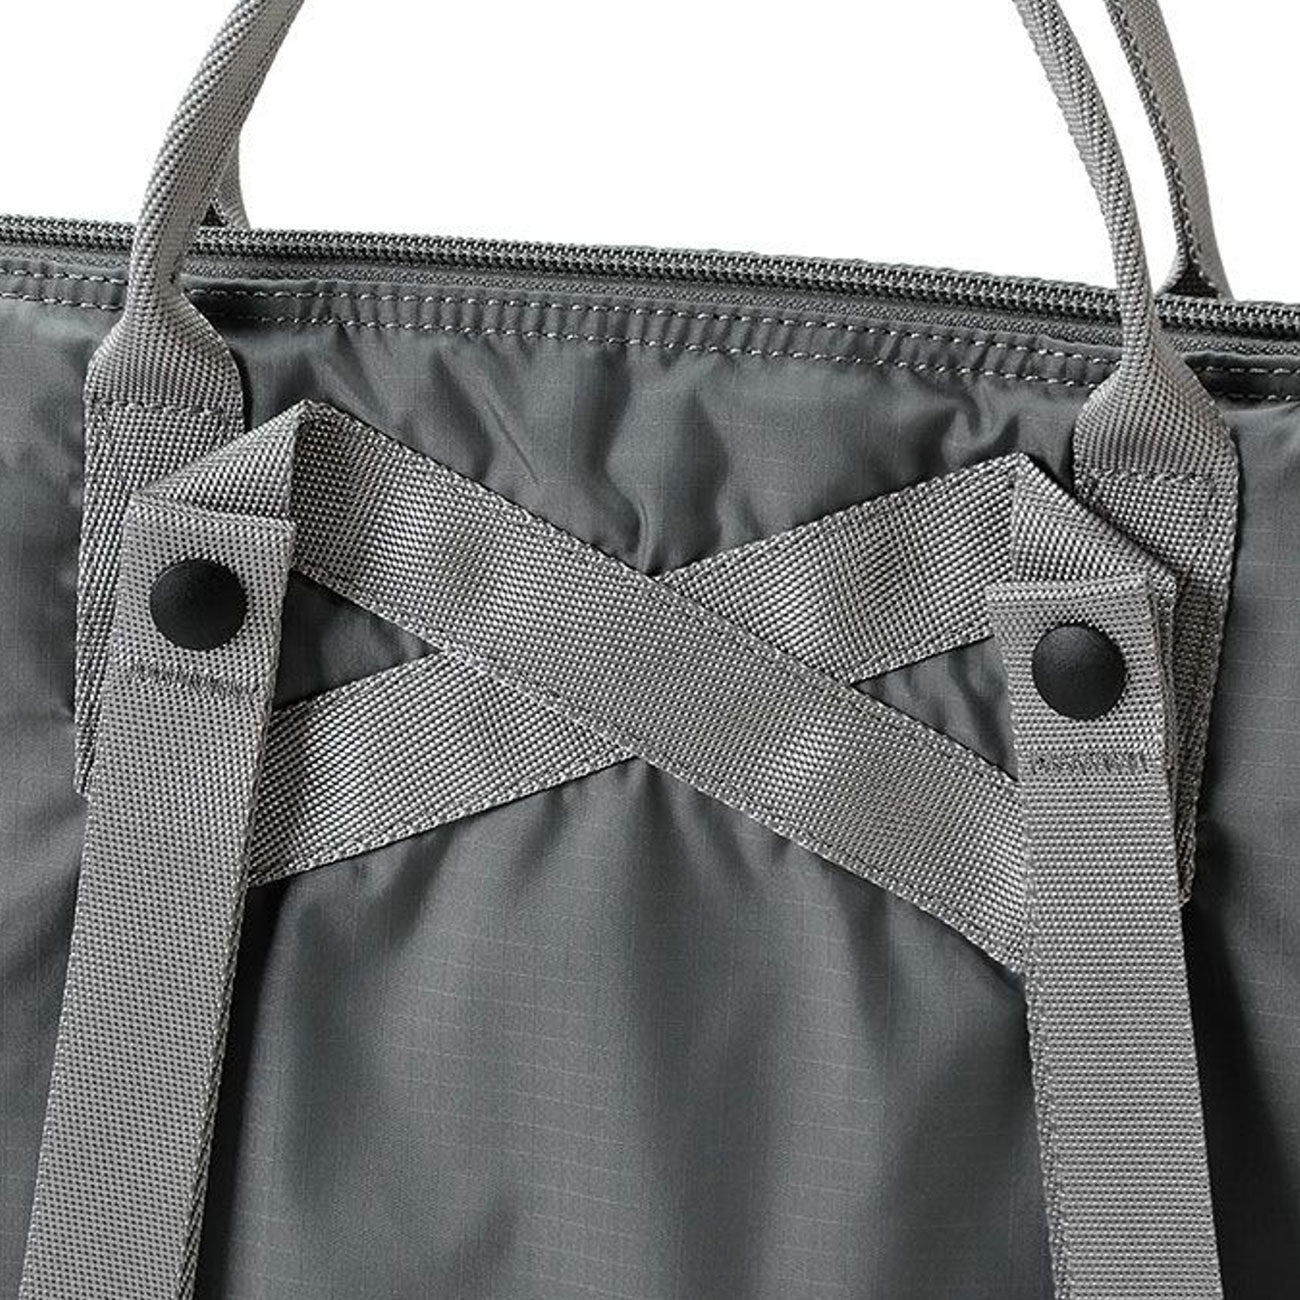 Porter By Yoshida Flex 2 Way Tote Bag (Grau)  - Allike Store